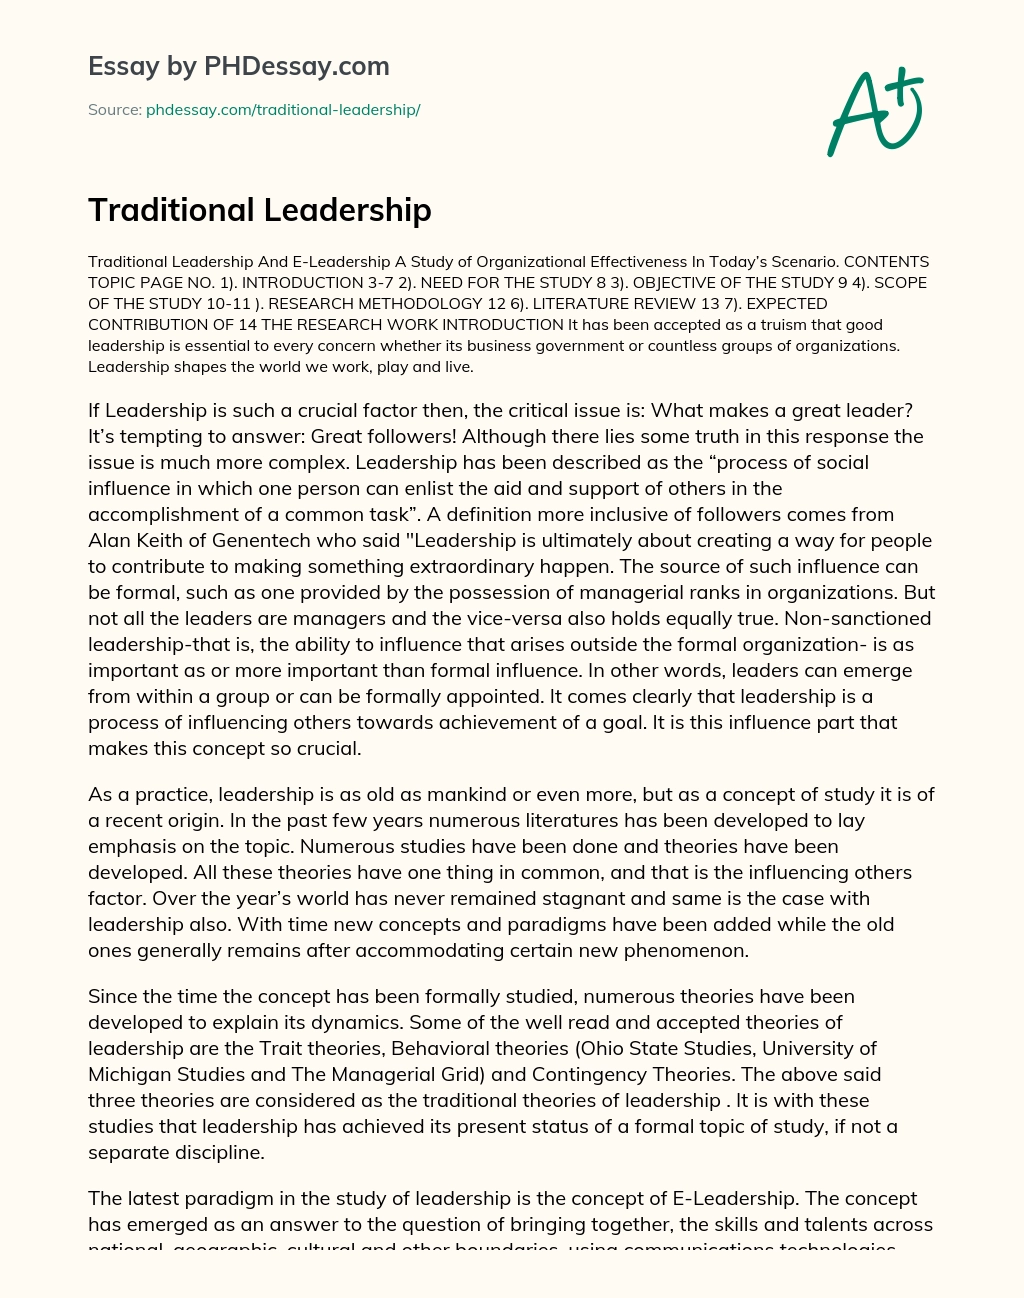 Traditional Leadership essay